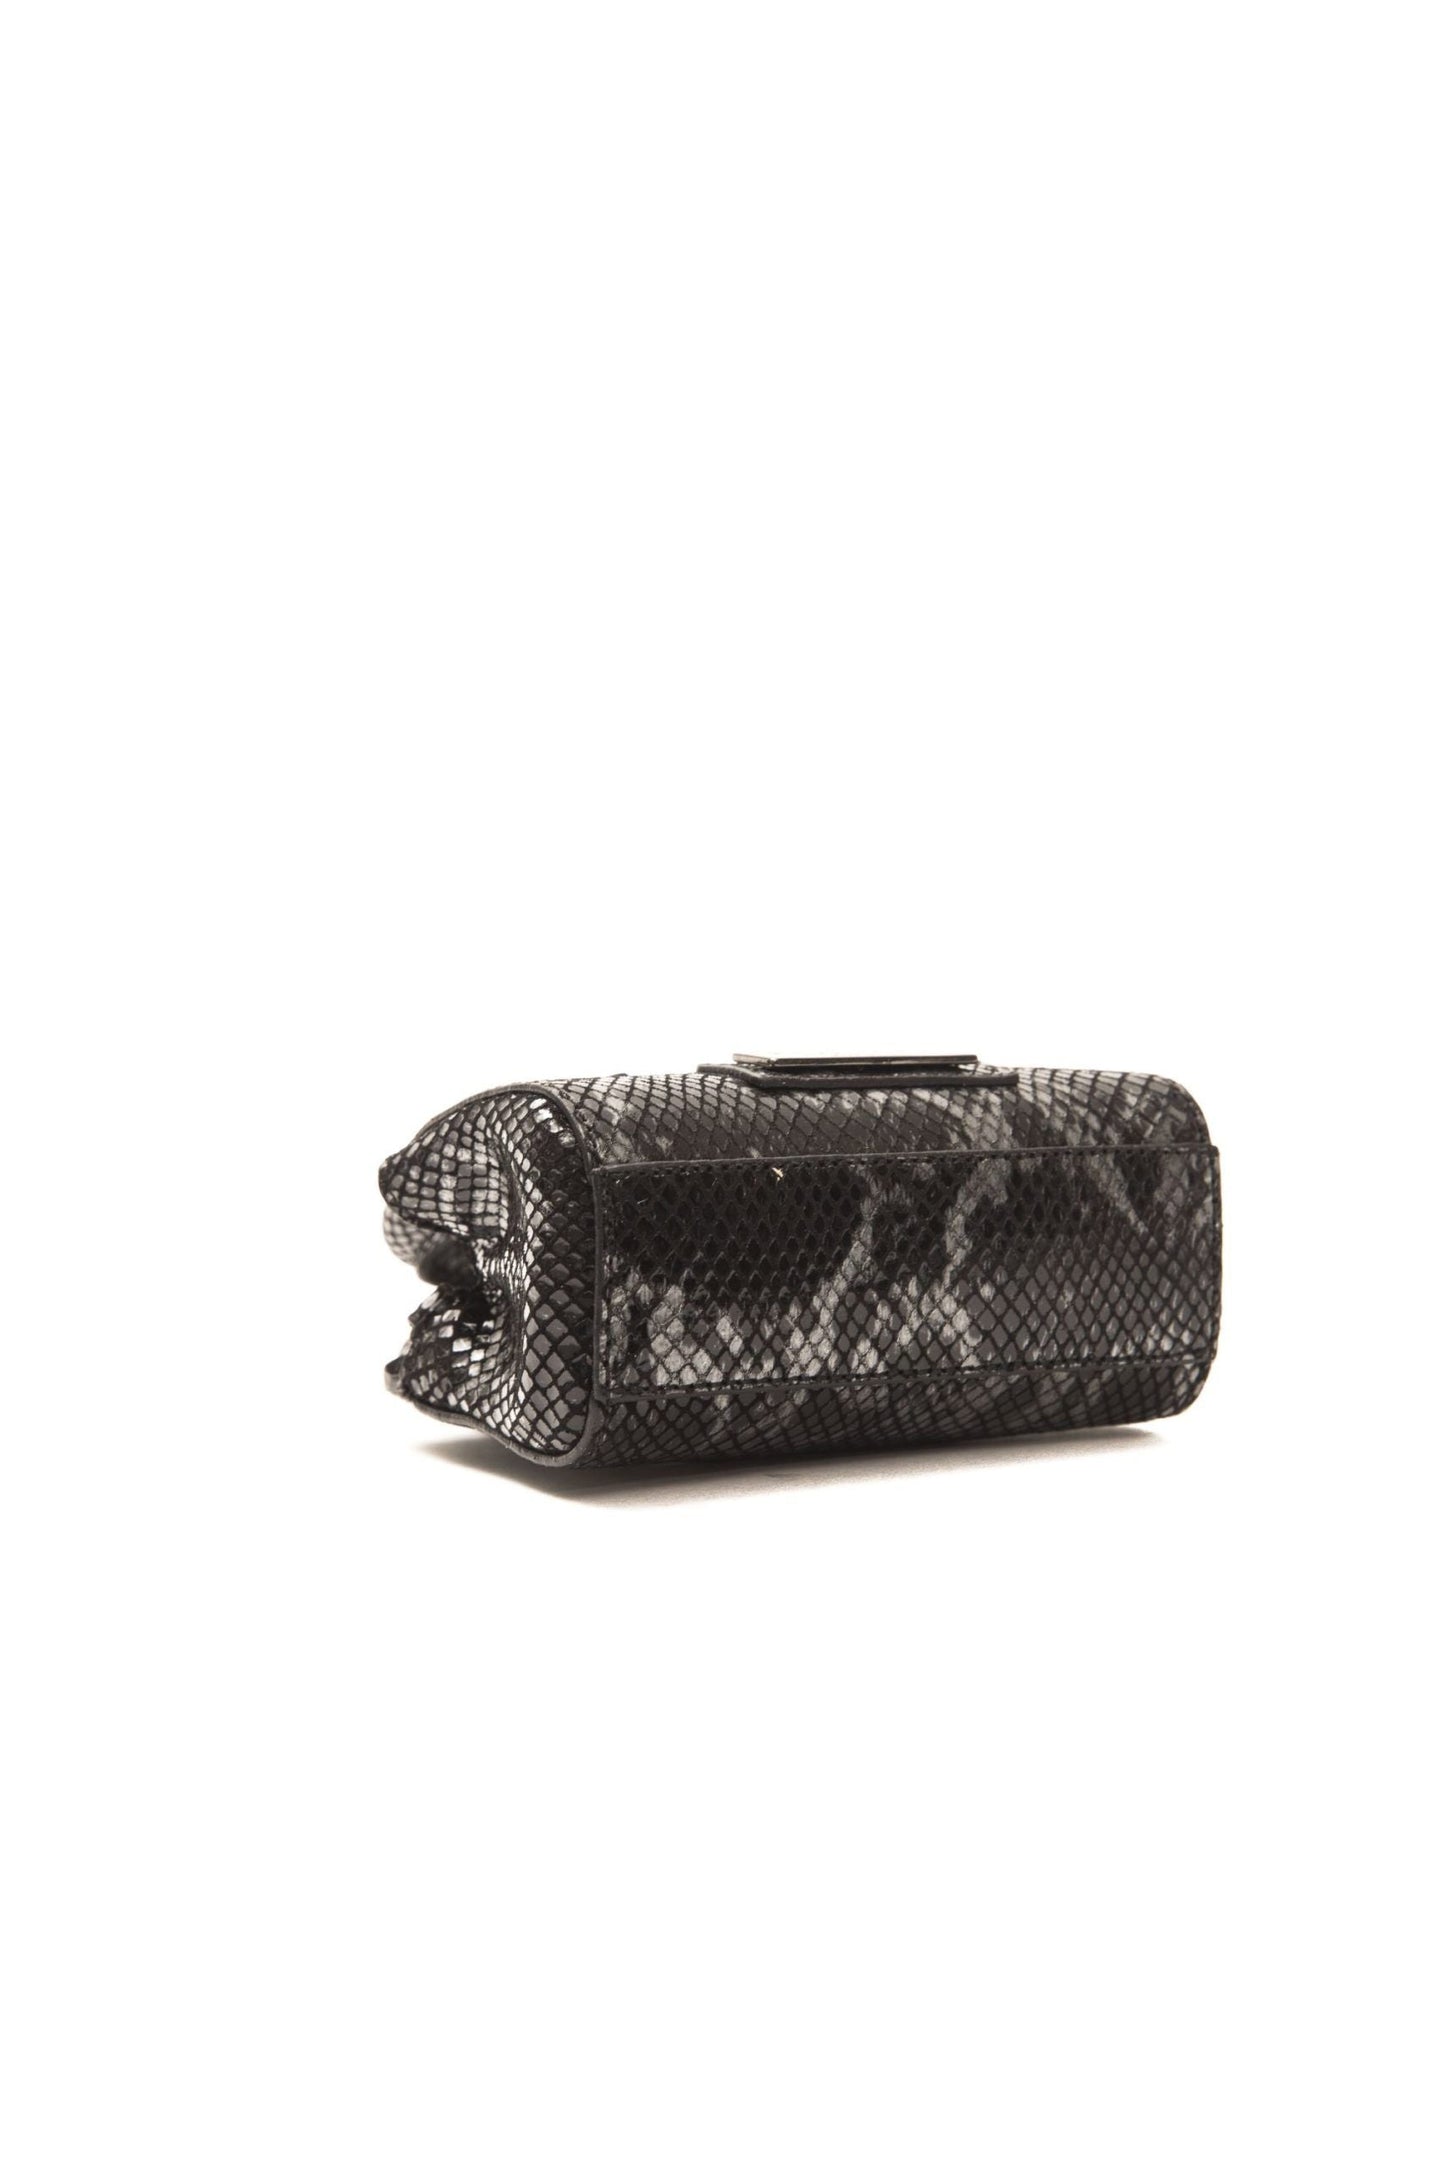 Fashionsarah.com Fashionsarah.com Pompei Donatella Gray Leather Mini Handbag